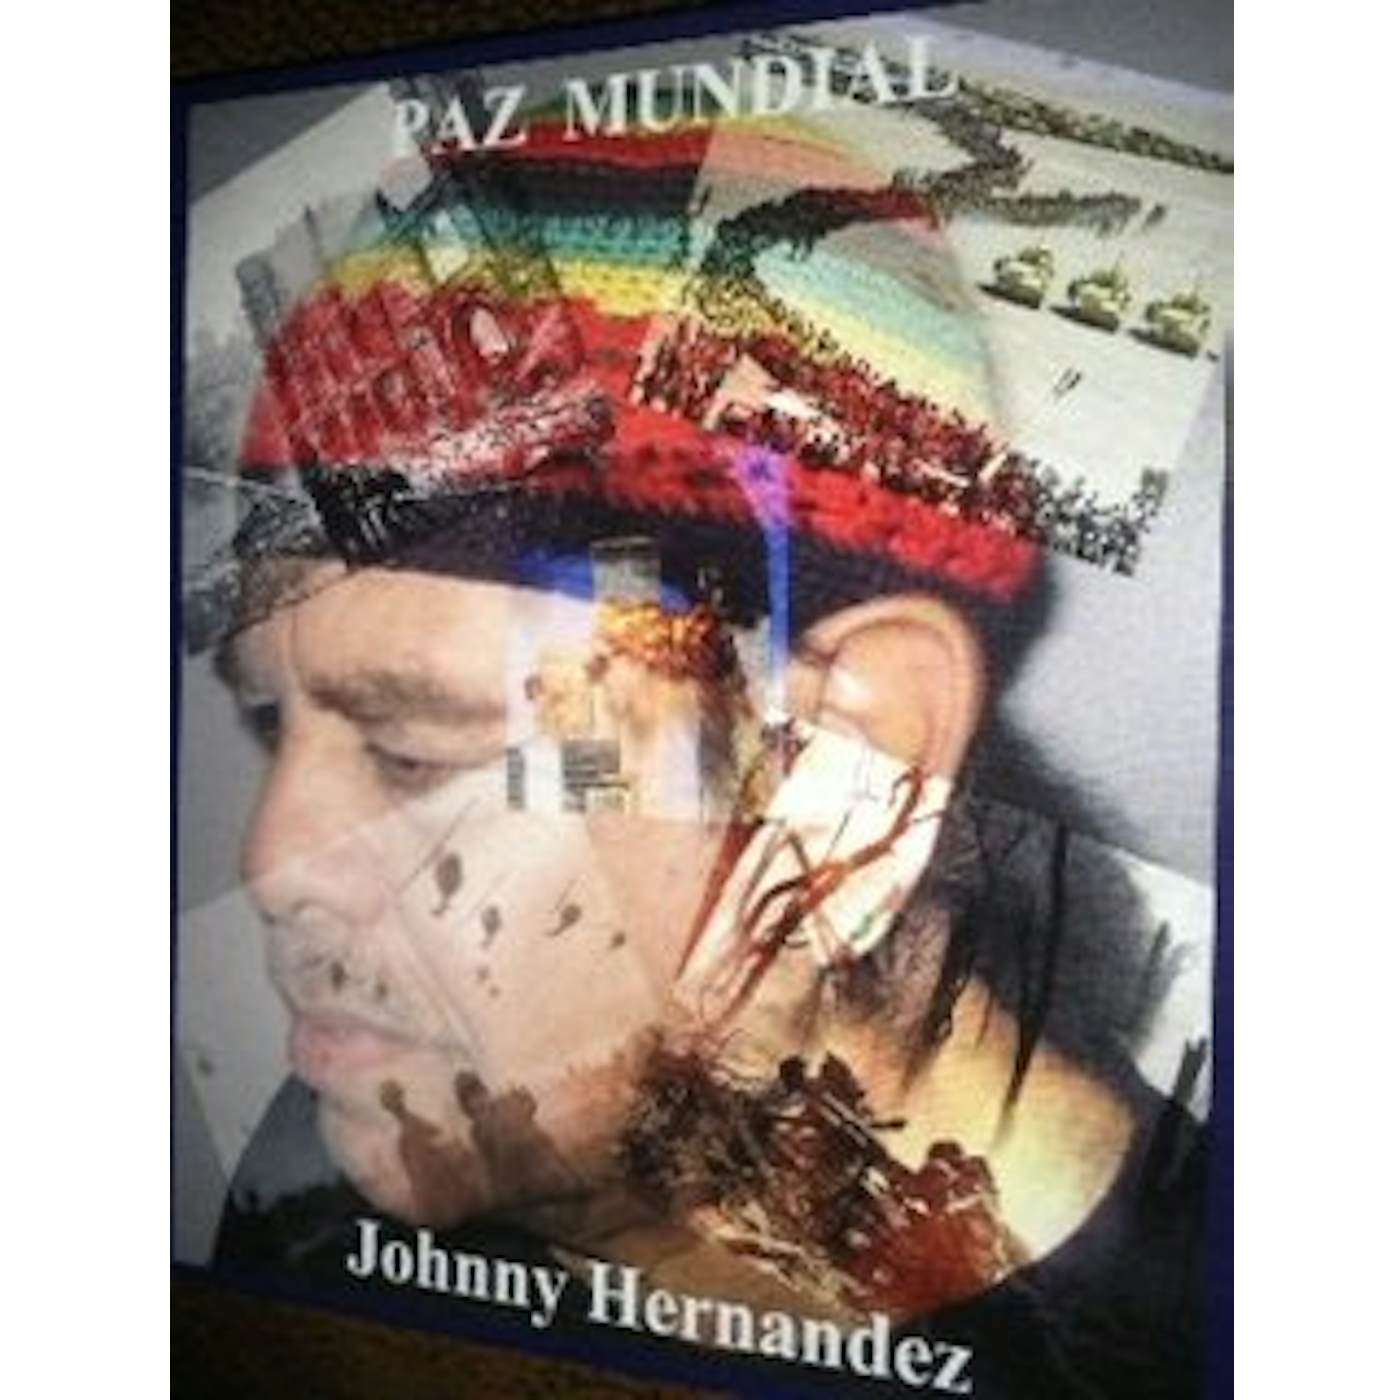 Johnny Hernandez PAZ MUNDIAL CD